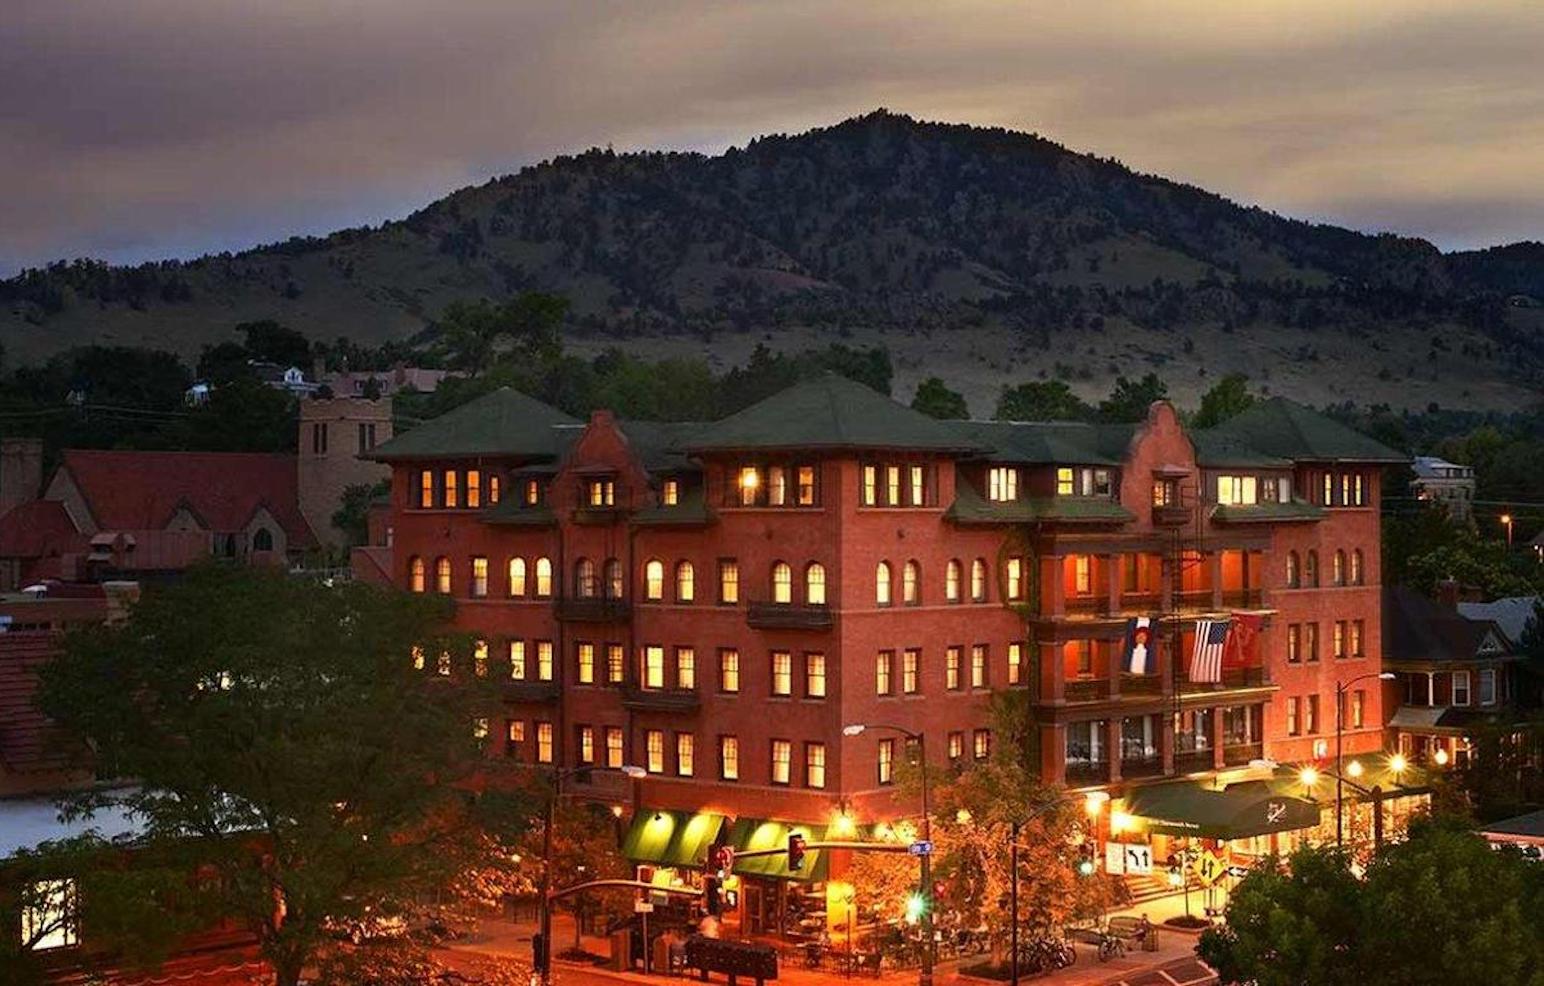 Hotel Boulderado with mountain view